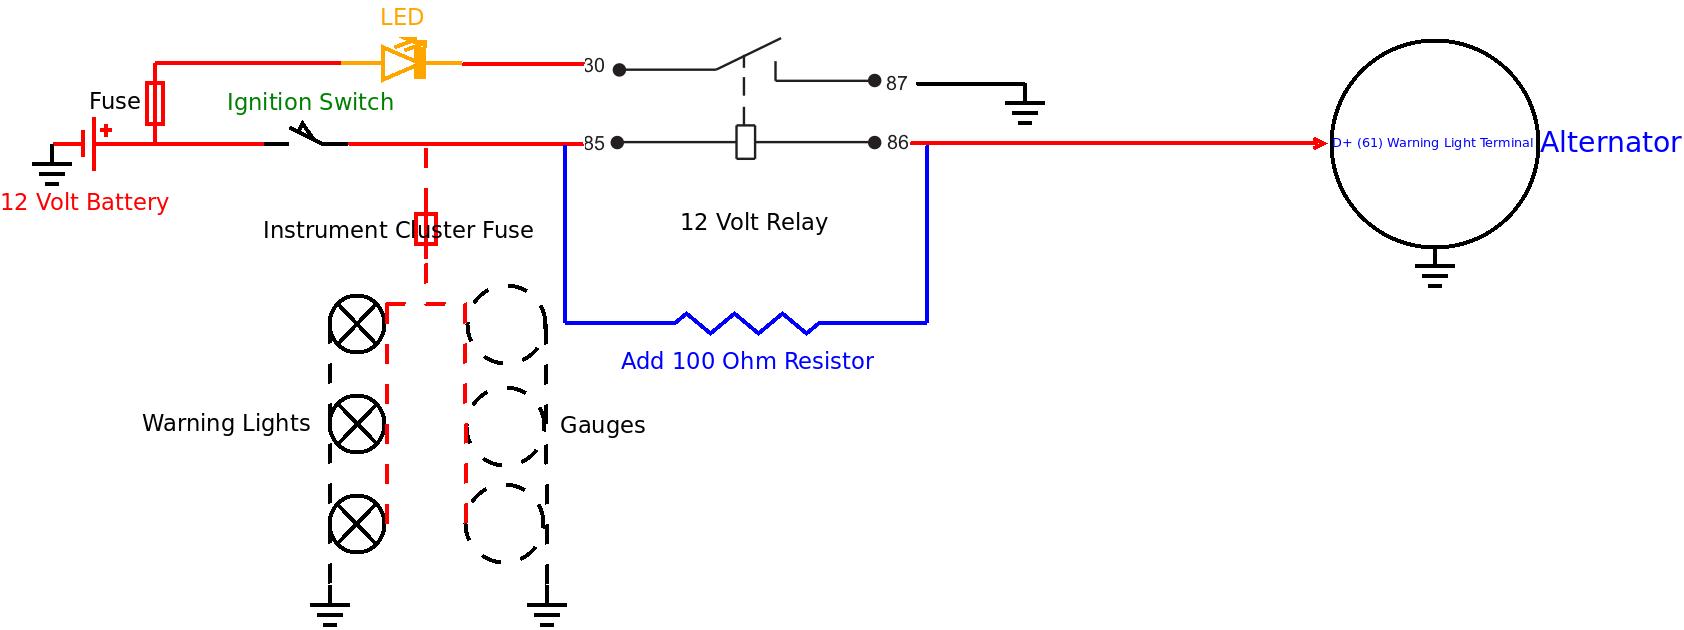 LED Alternator Warning Light Circuit - Page 1 - General TVR Stuff & Gossip - PistonHeads